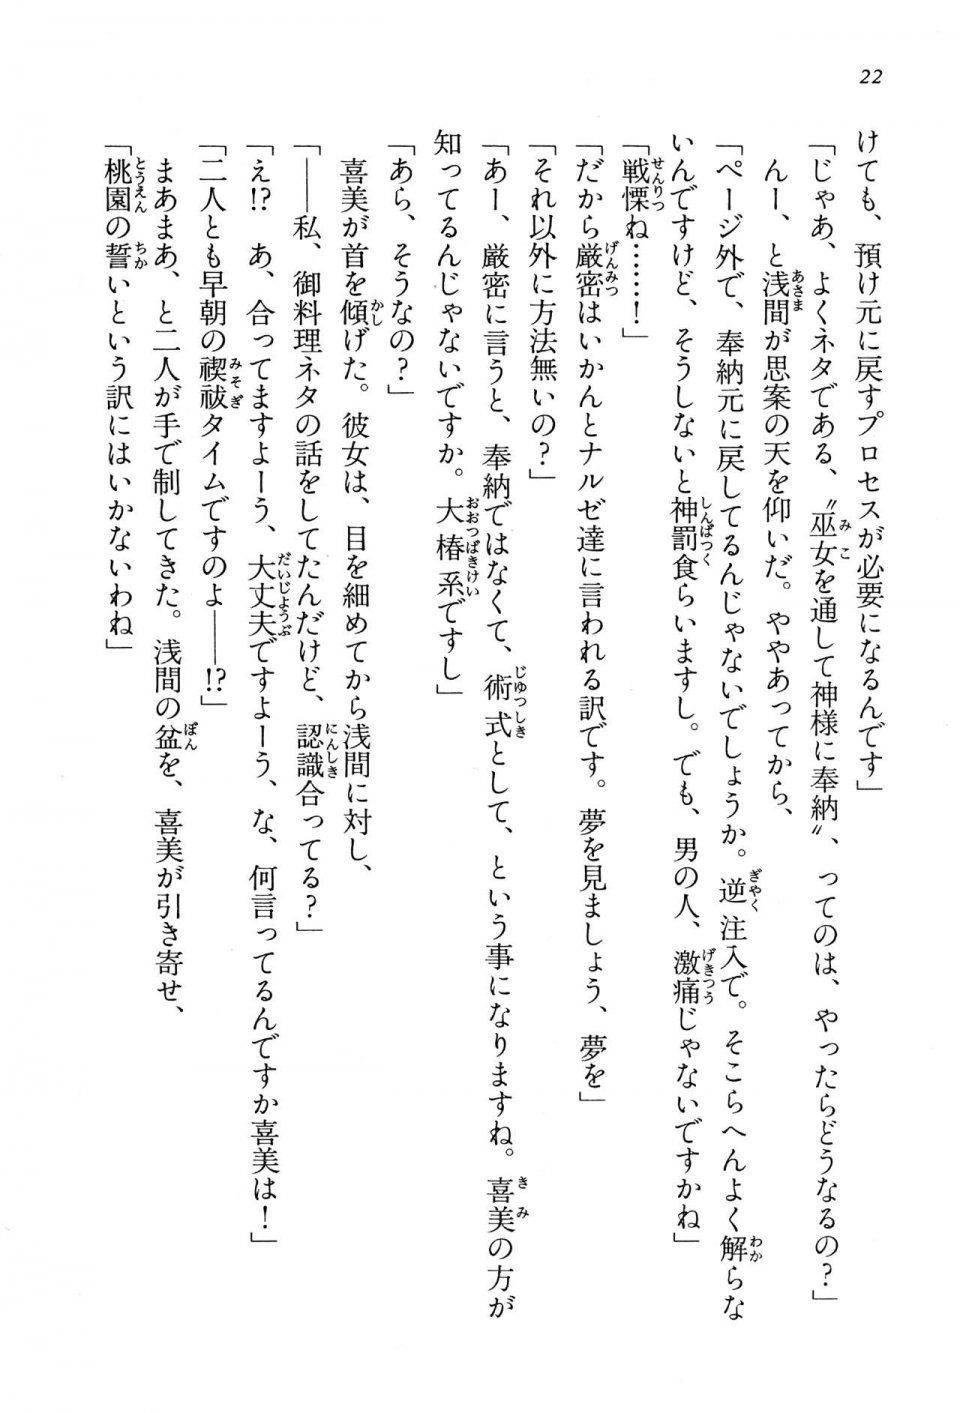 Kyoukai Senjou no Horizon BD Special Mininovel Vol 5(3A) - Photo #26